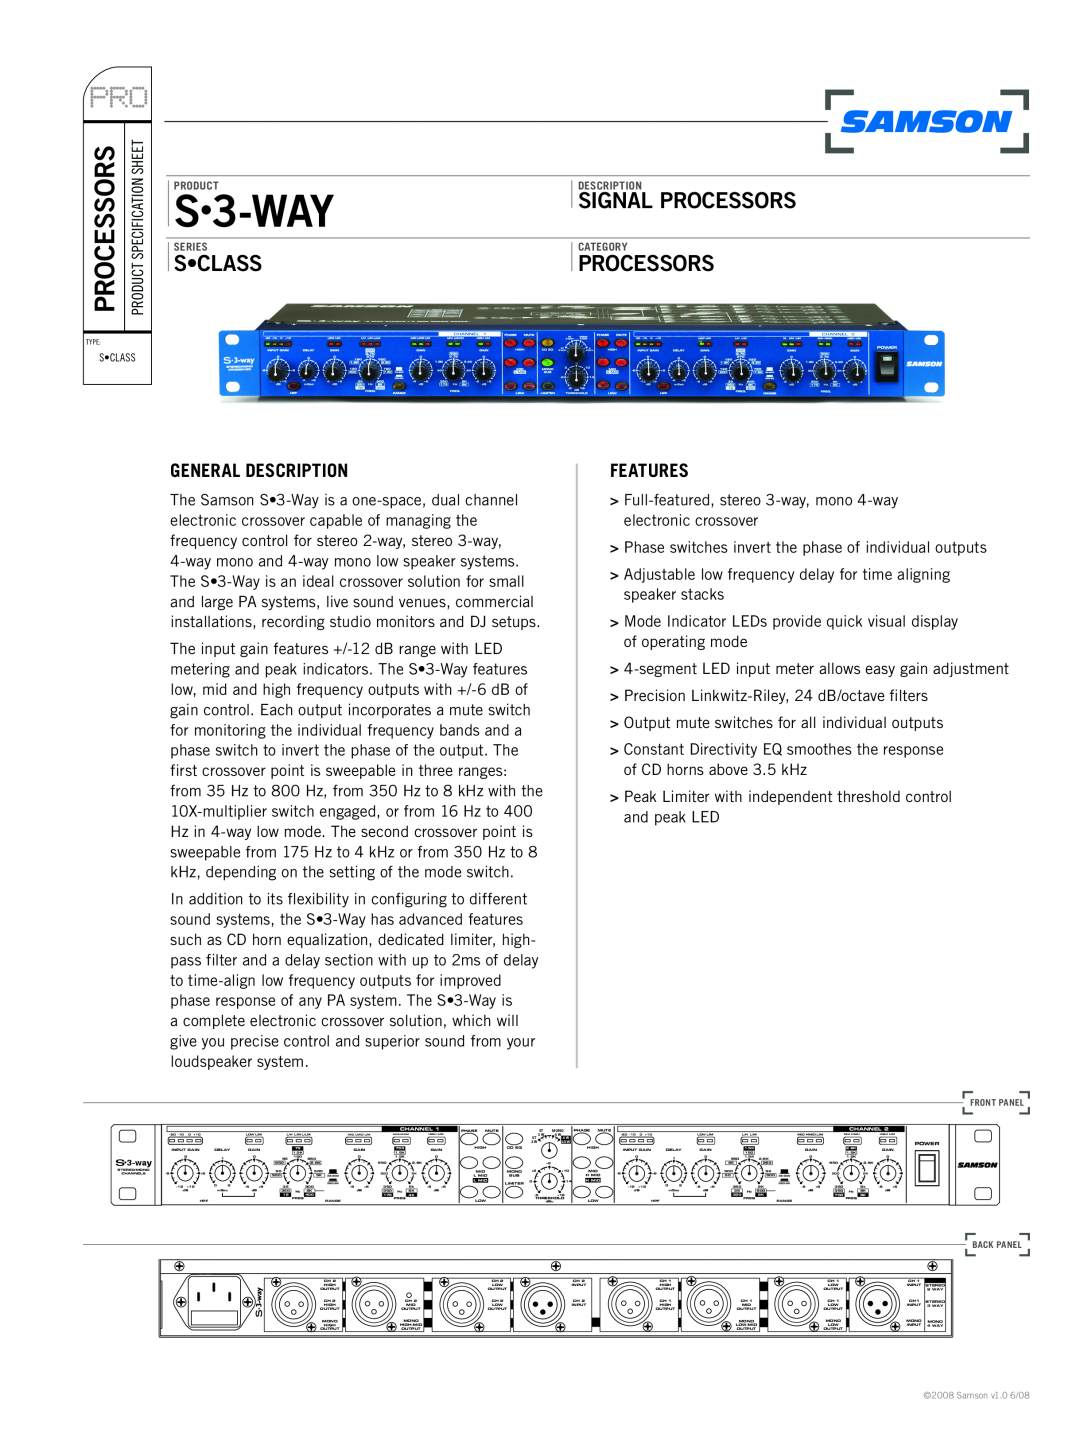 Samson S3-Way specifications General Description, Features, S3-WAY, Signal Processors, S Class 